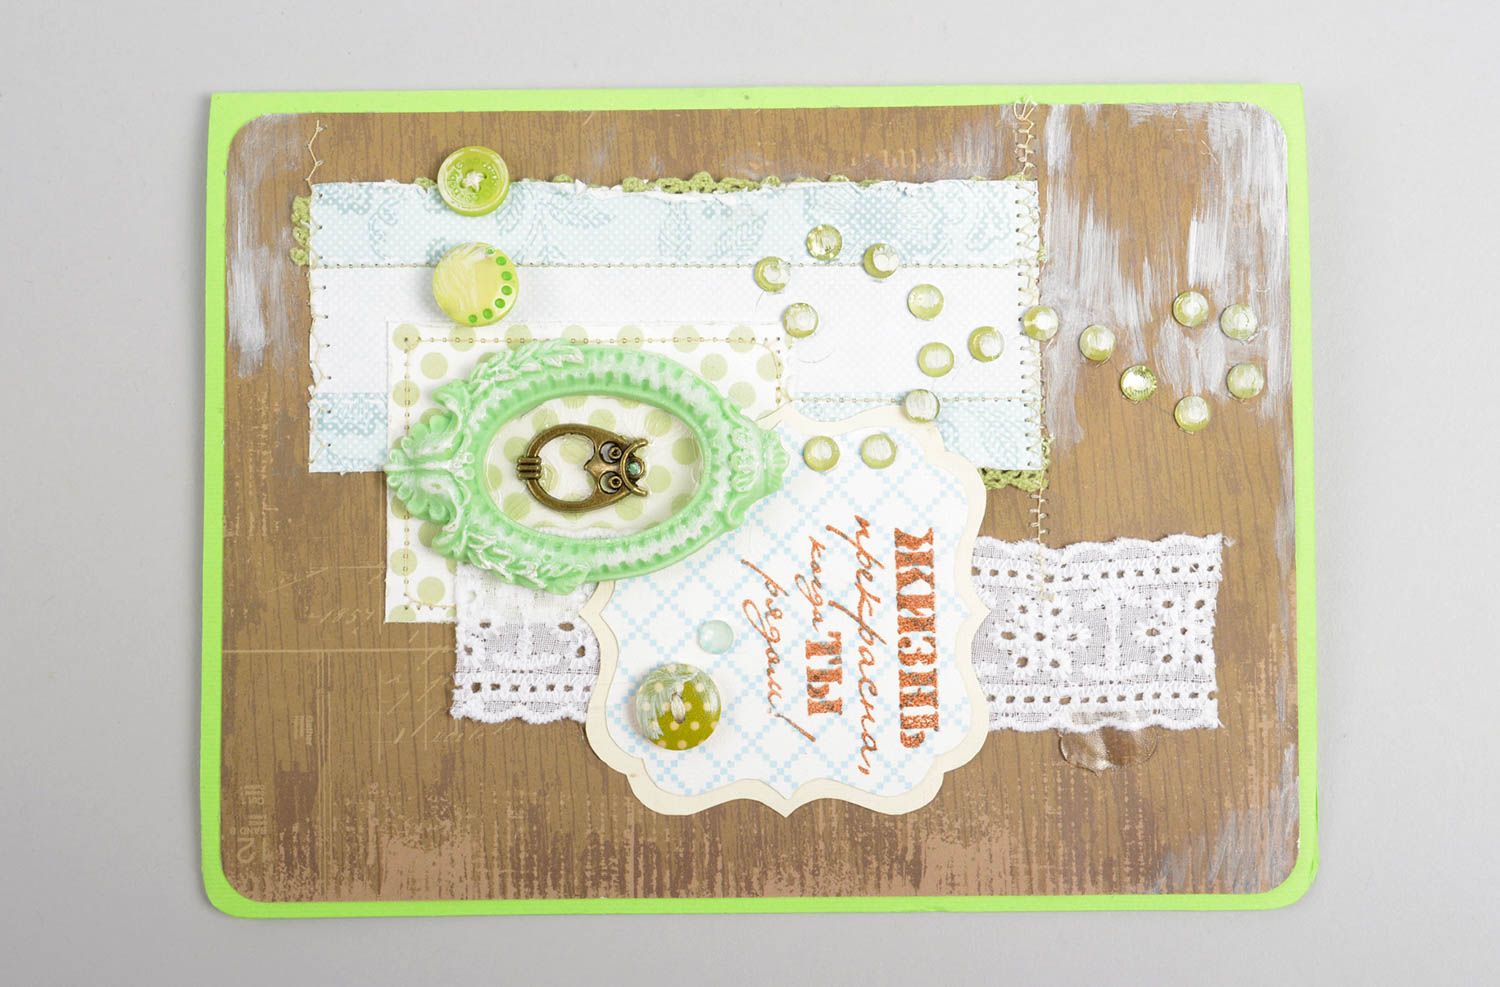 Scrapbook Material handmade Hochzeit Geschenk Geldgeschenk Verpackung schön foto 4